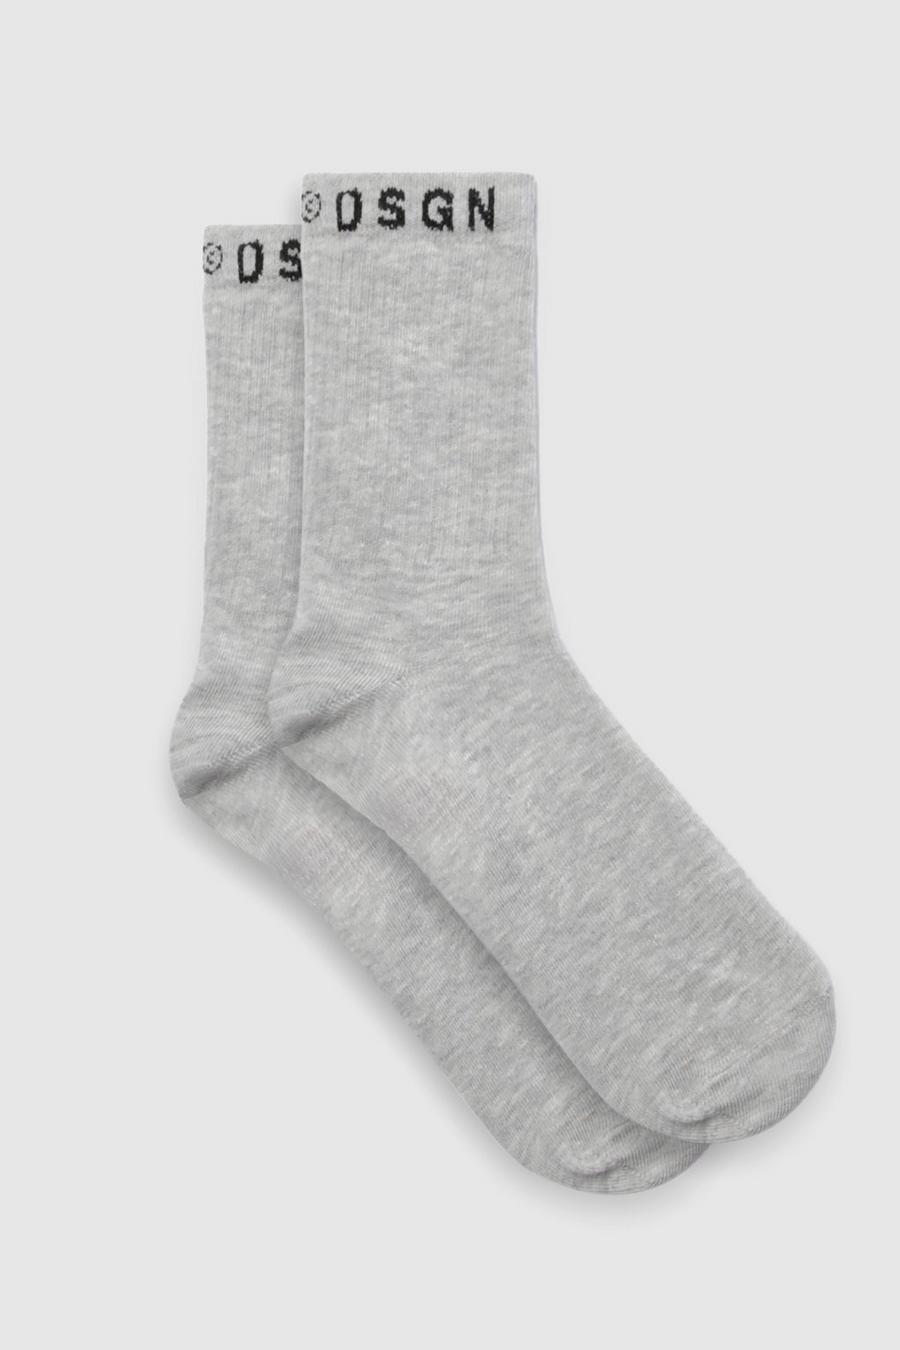 Dsgn Studio Basic Sport-Socken, Grey marl